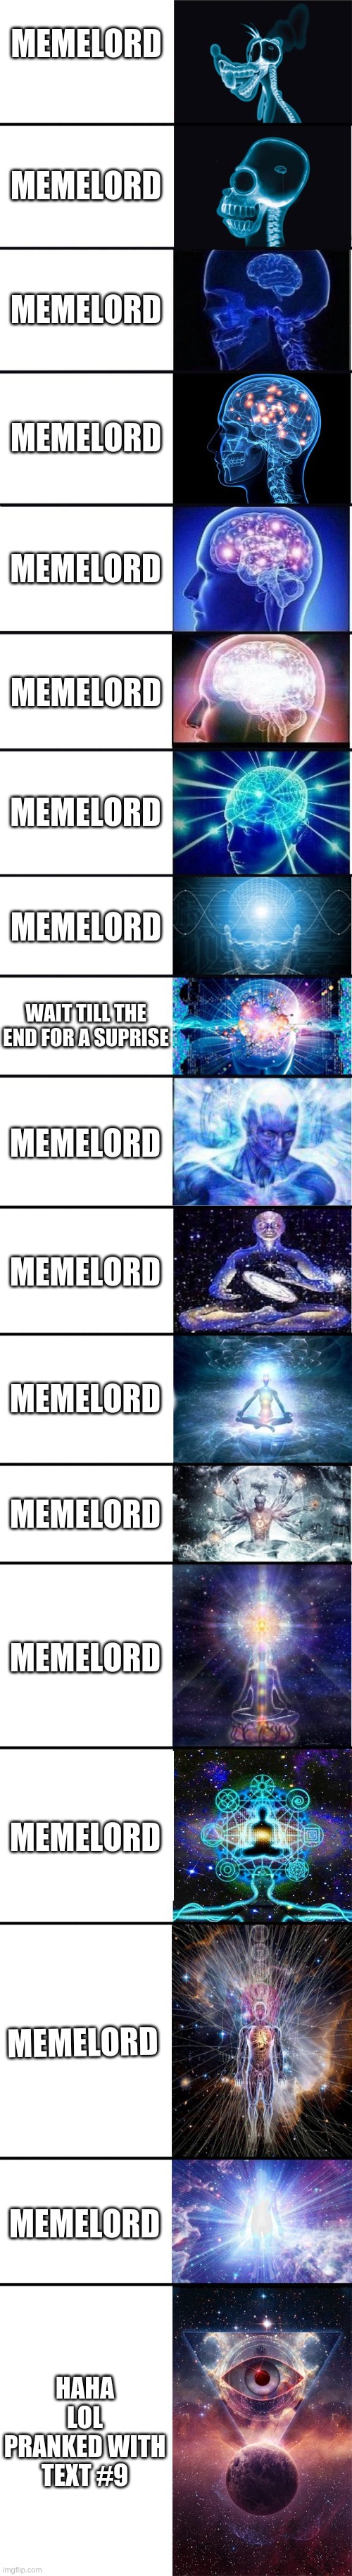 expanding brain: 9001 | MEMELORD MEMELORD MEMELORD MEMELORD MEMELORD MEMELORD MEMELORD MEMELORD WAIT TILL THE END FOR A SUPRISE MEMELORD MEMELORD MEMELORD MEMELORD  | image tagged in expanding brain 9001 | made w/ Imgflip meme maker